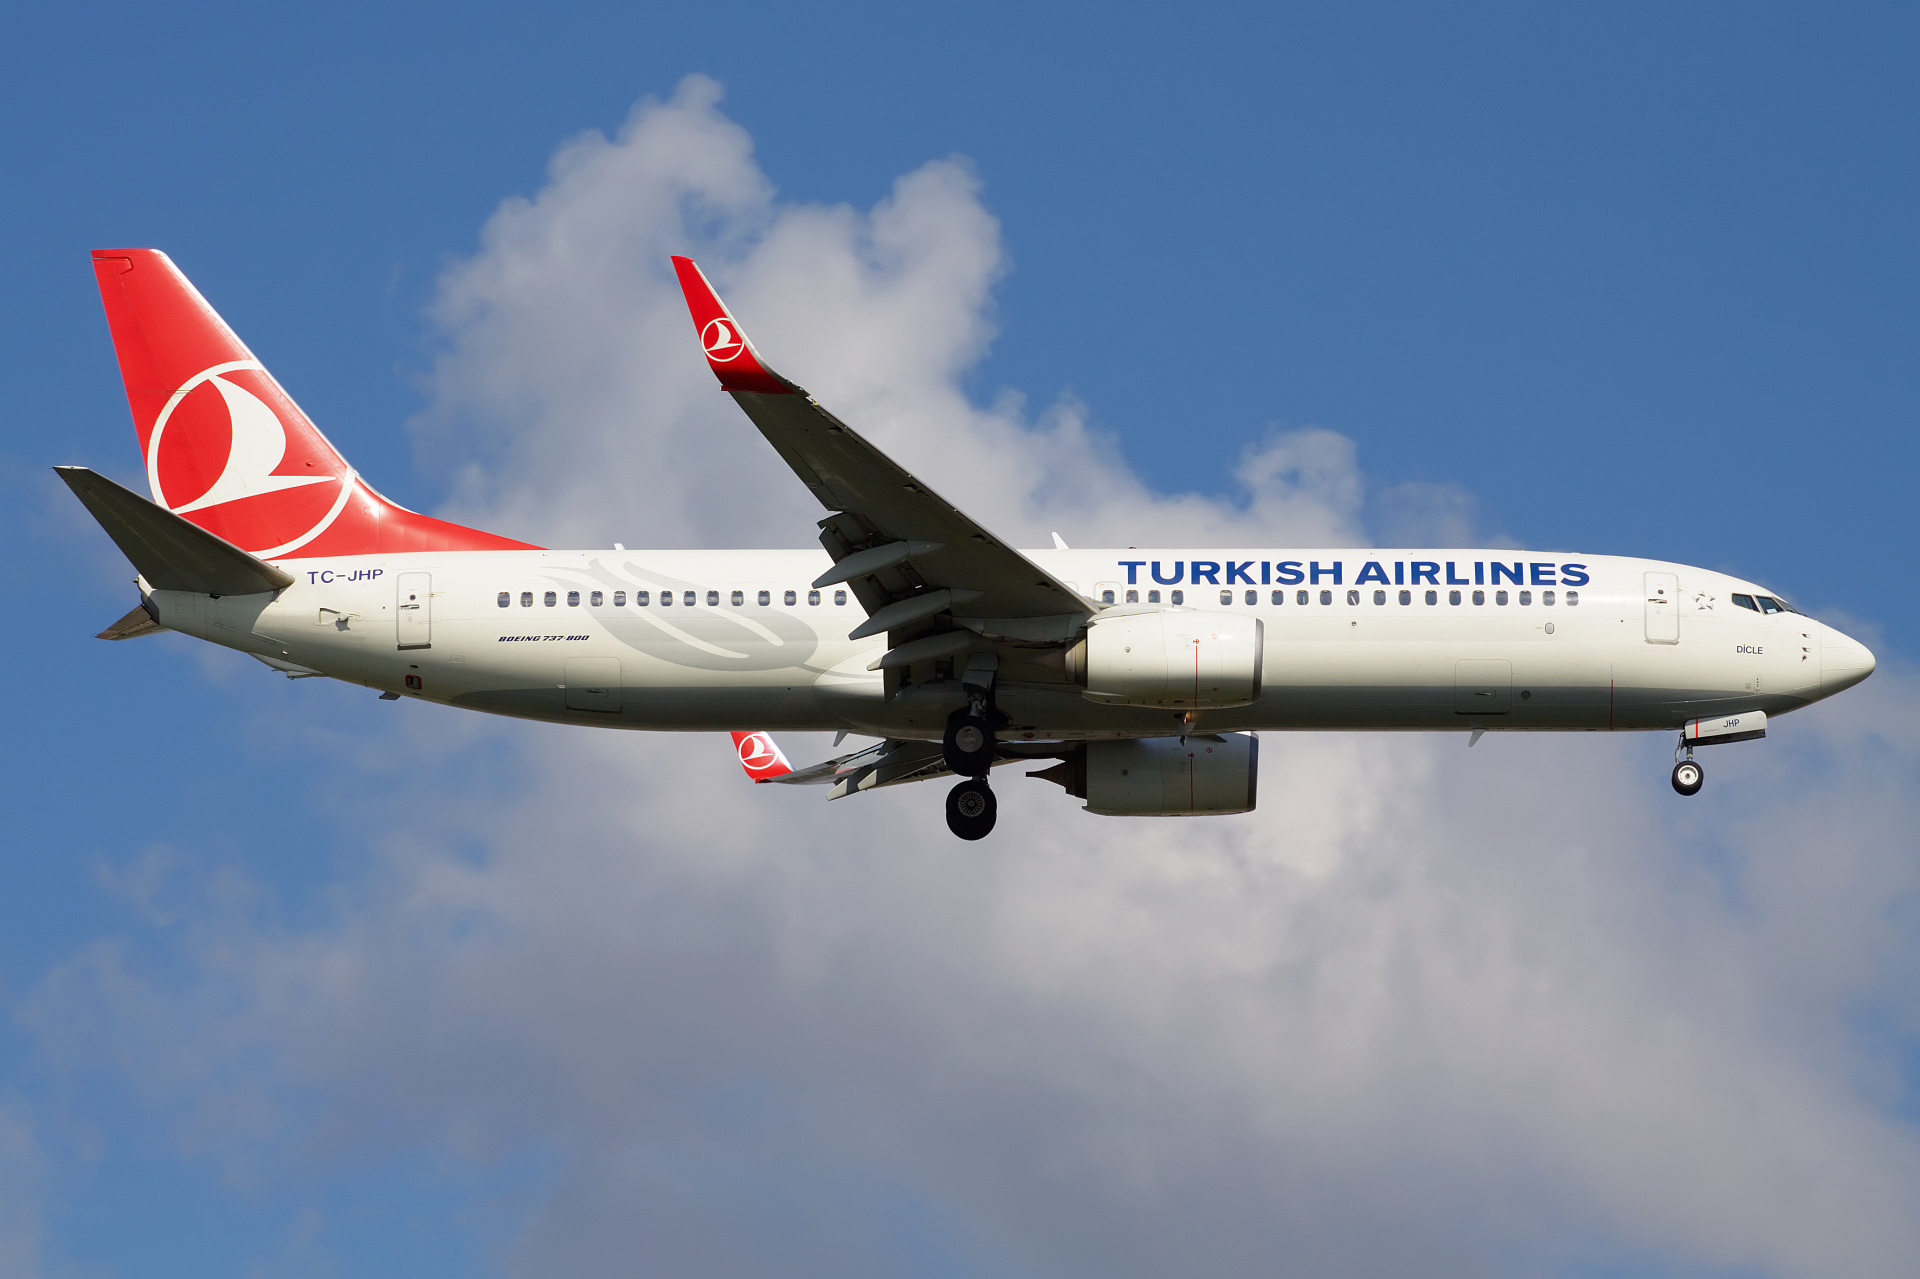 TC-JHP (Samoloty » Port Lotniczy im. Atatürka w Stambule » Boeing 737-800 » THY Turkish Airlines)